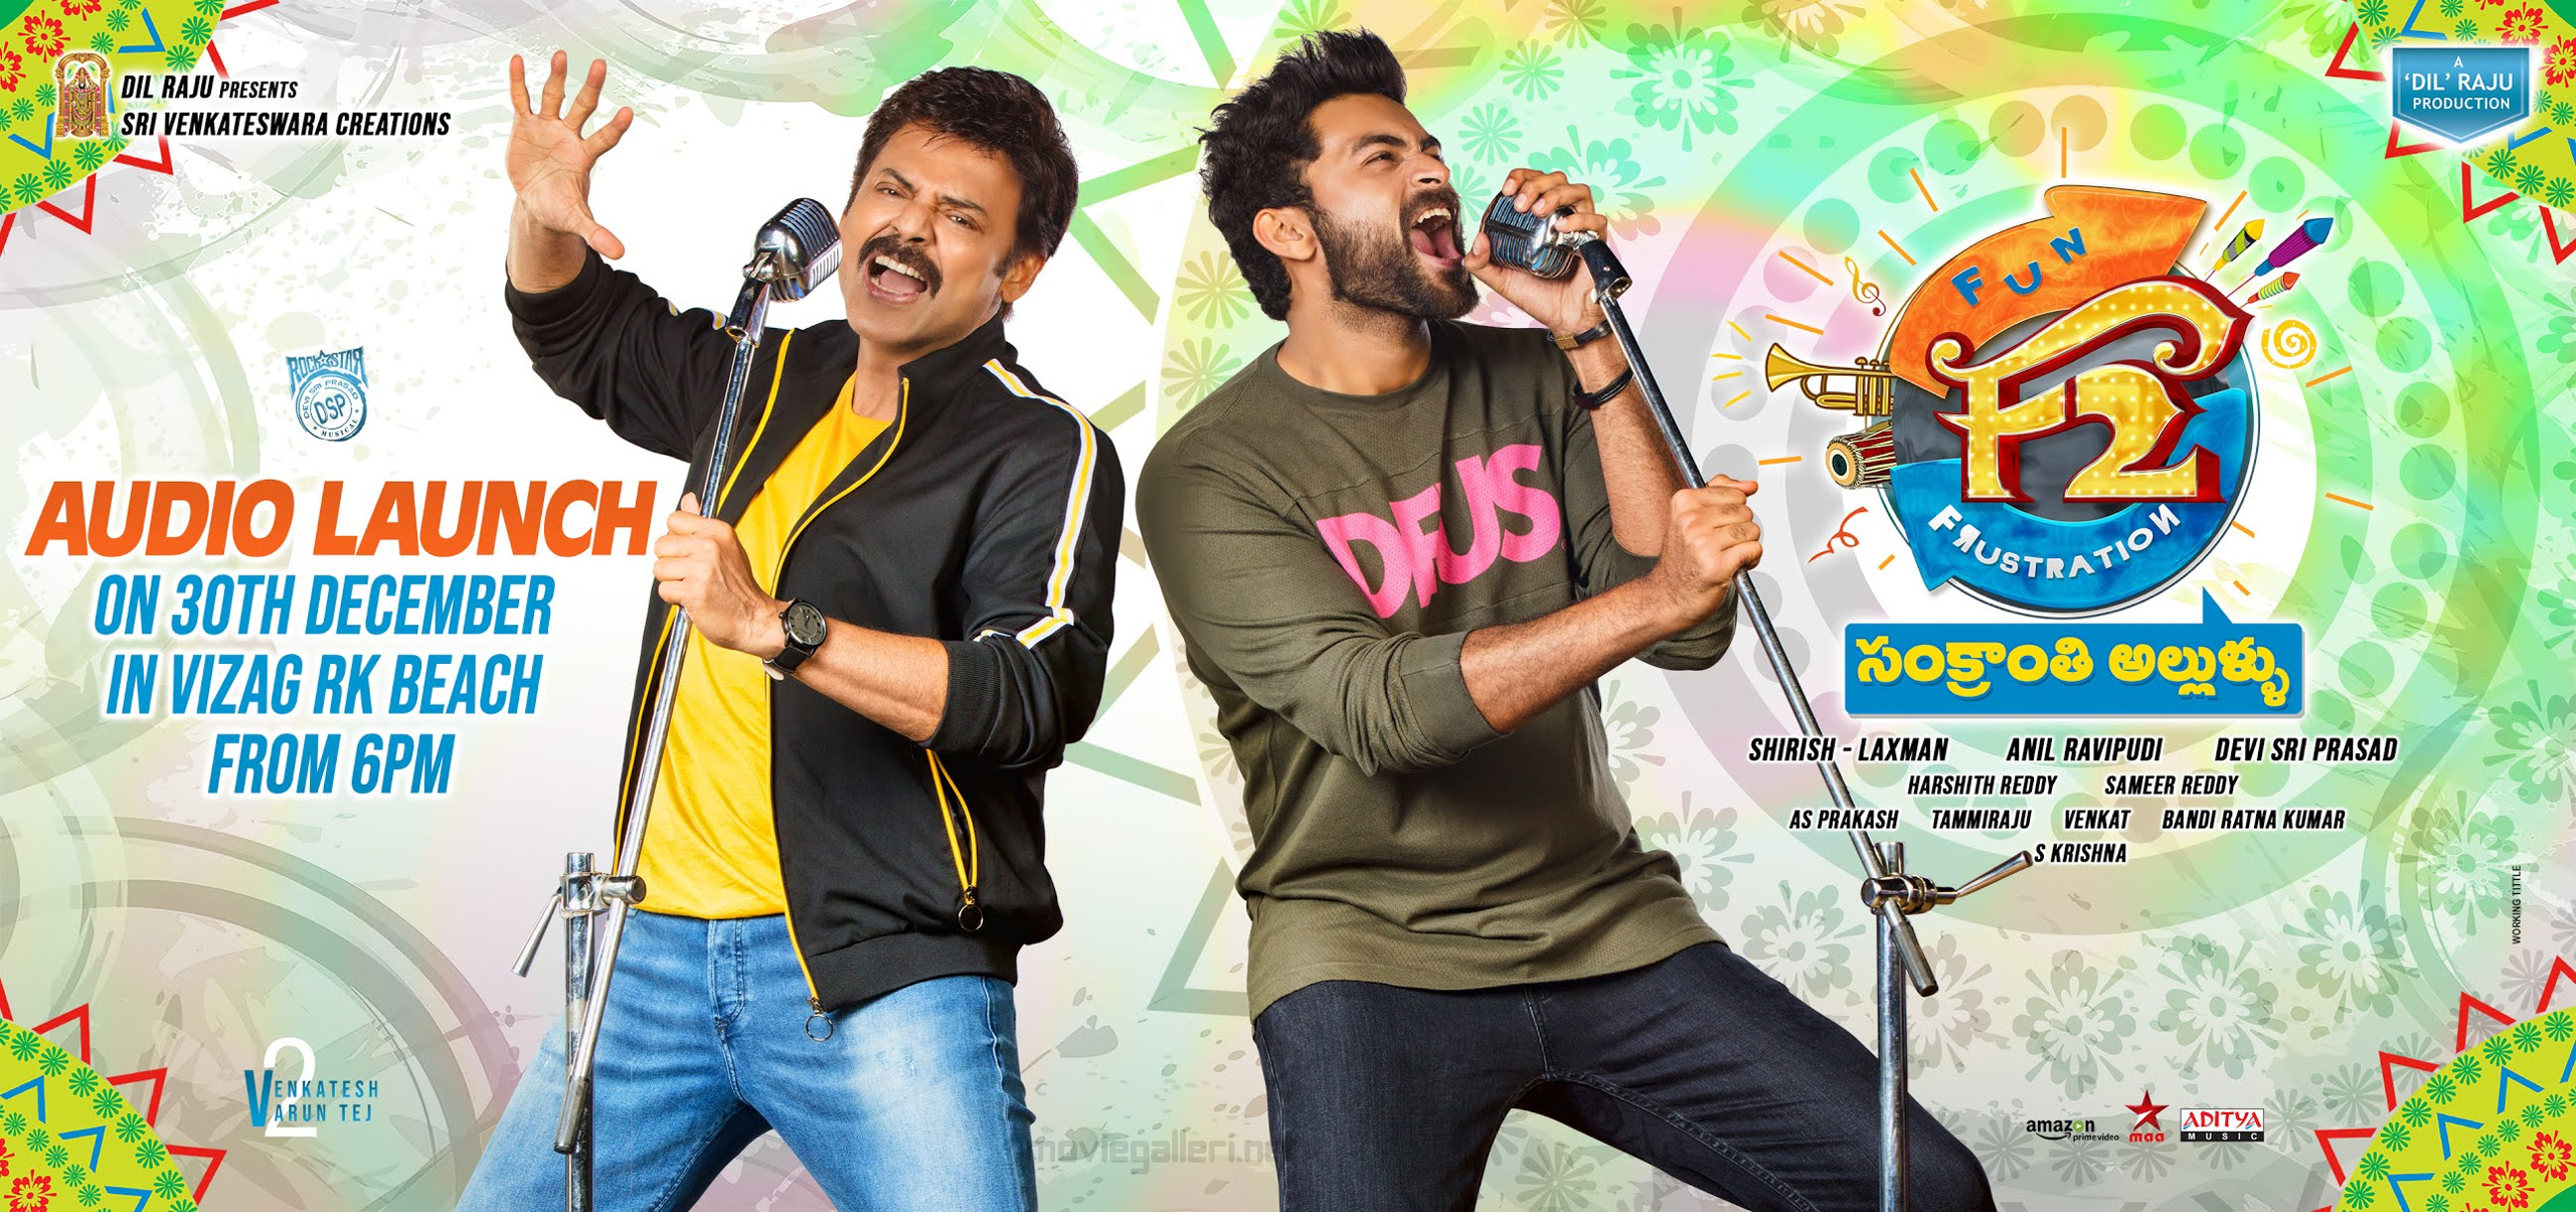 Venkatesh Varun Tej F2 Fun And Frustration Audio Launch - F2 Fun And Frustration Movie Hd , HD Wallpaper & Backgrounds